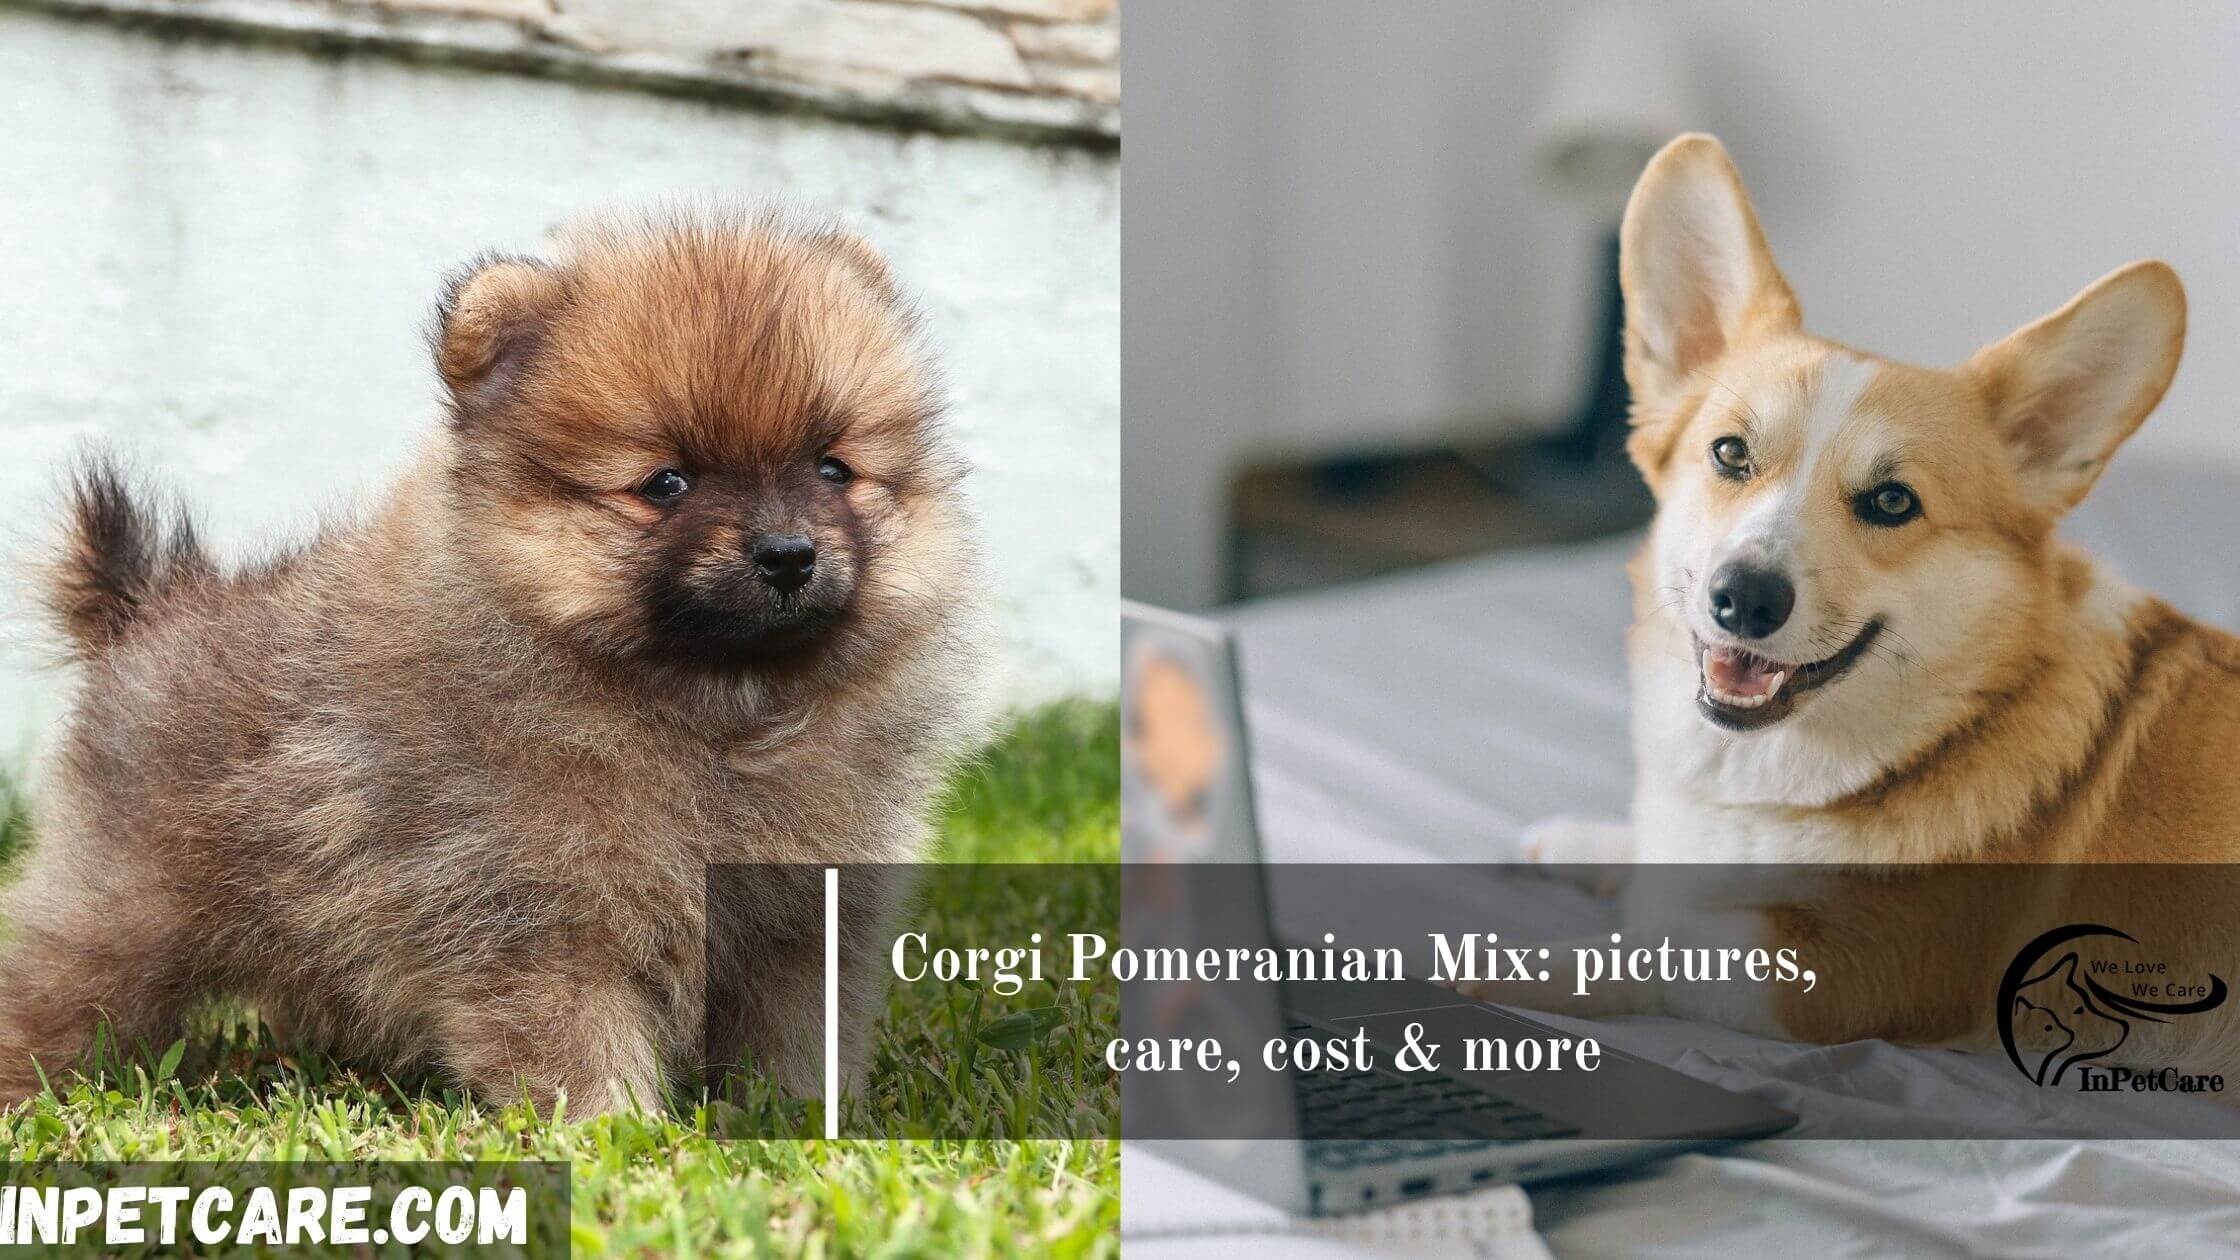 Corgi Pomeranian Mix: pictures, care, cost & more